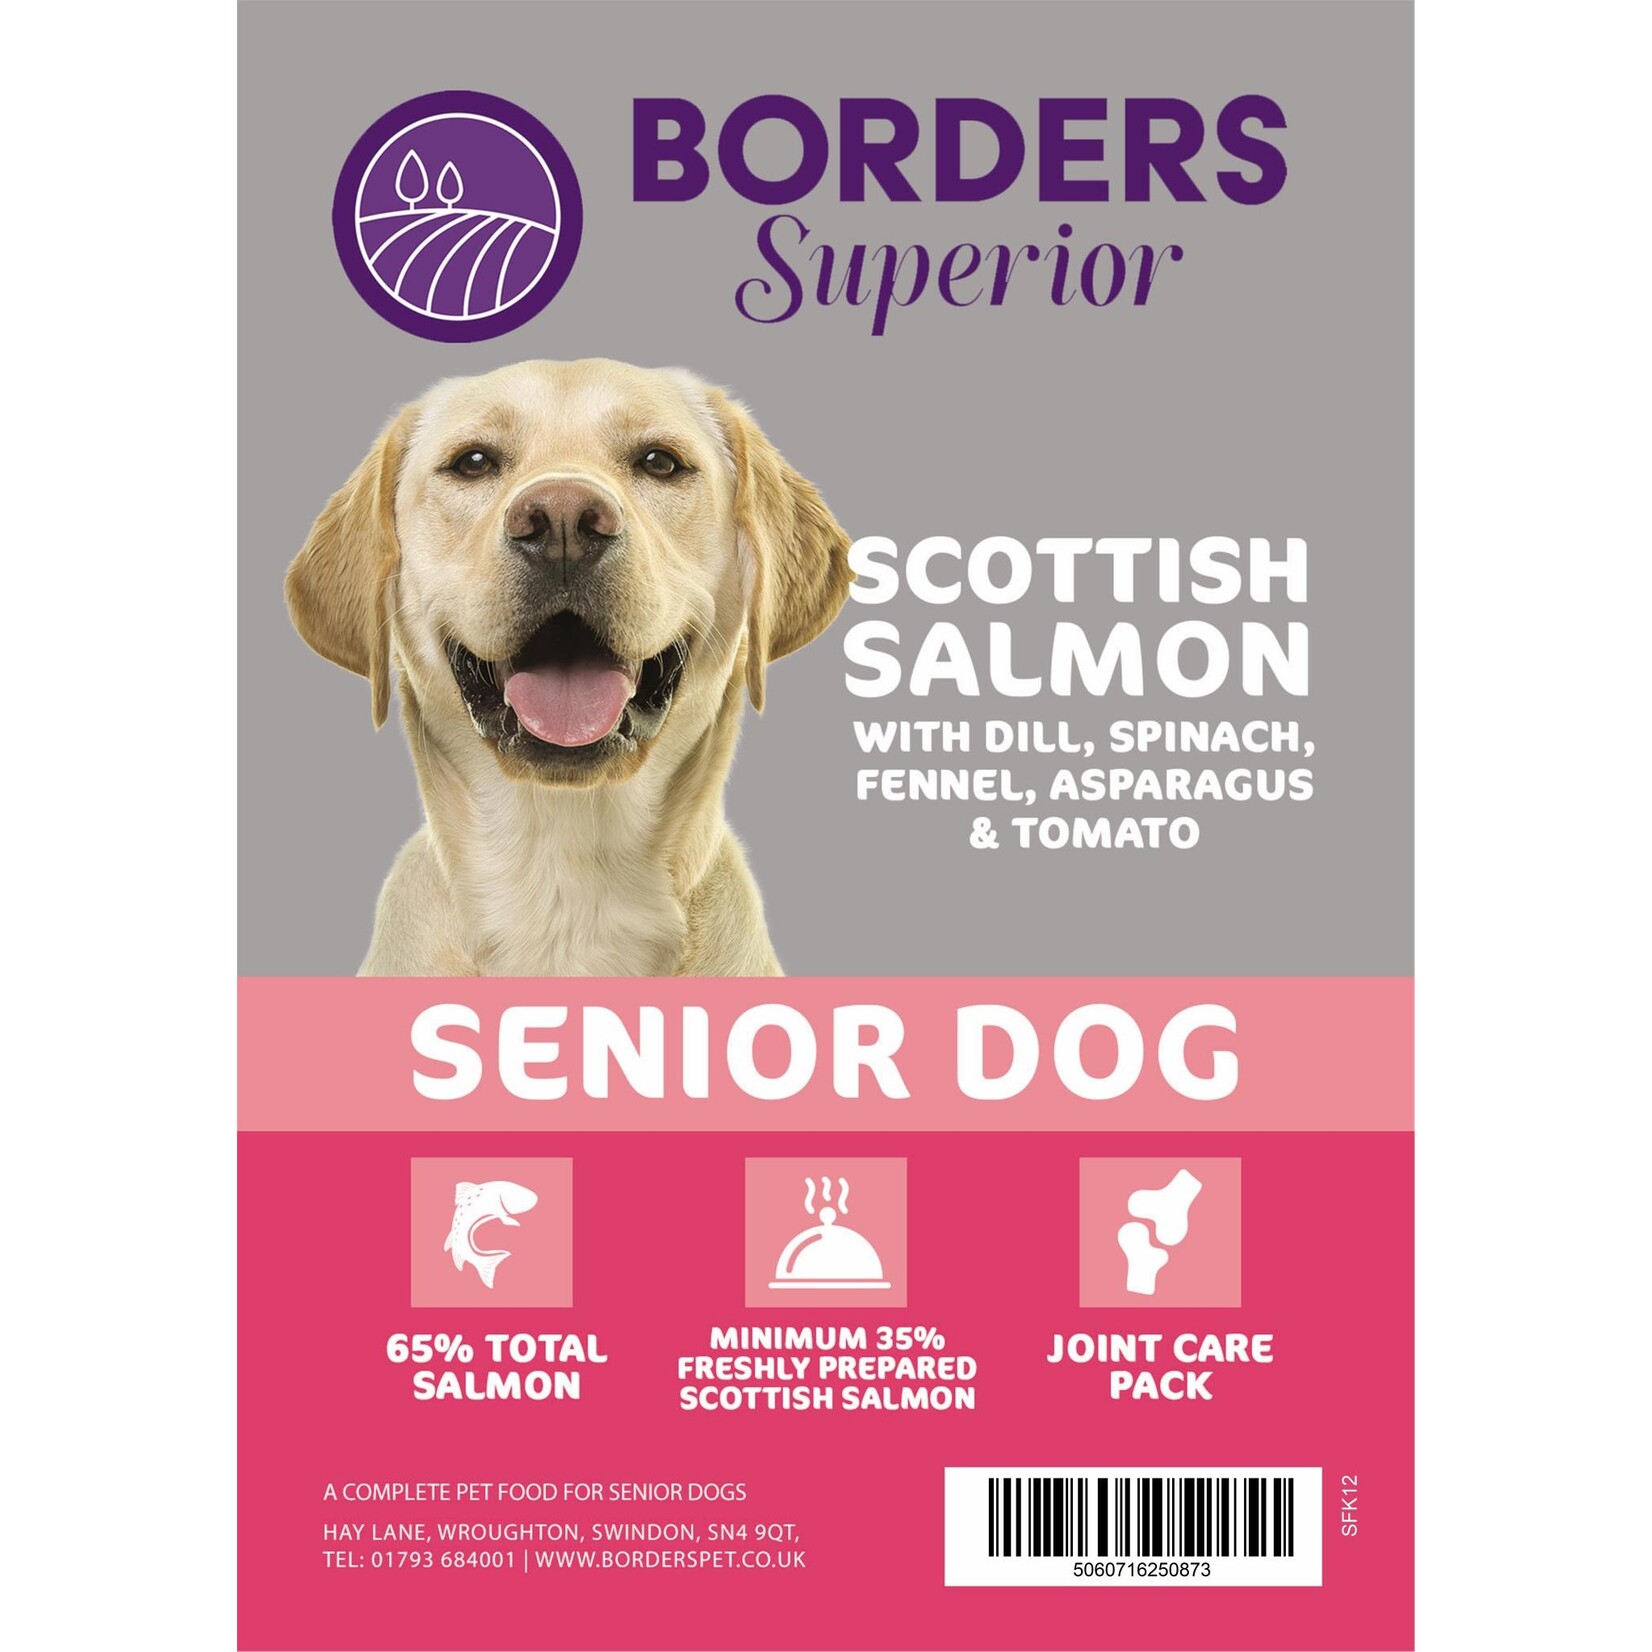 Borders Superior Senior Dog Scottish Salmon with Dill, Spinach, Fennel, Asparagus & Tomato